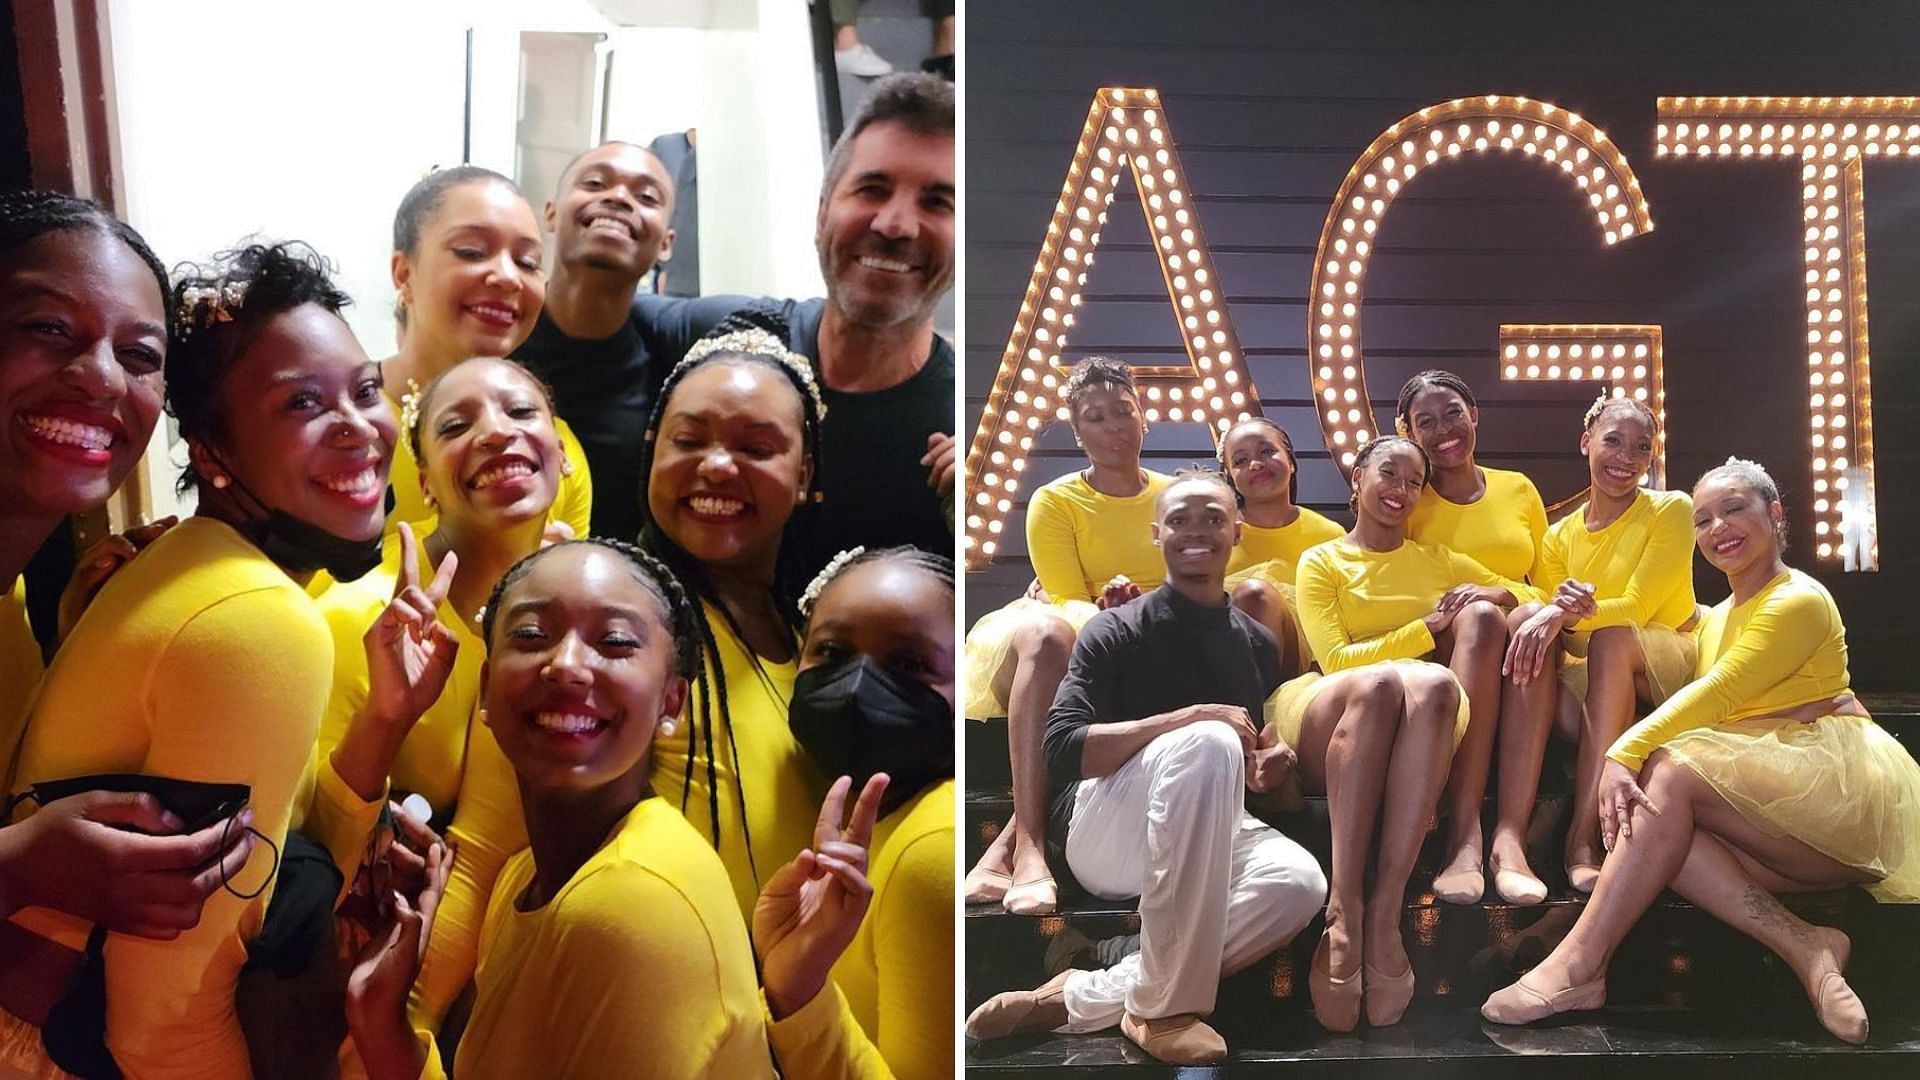 AGT group Ballet After Dark impresses judges with their dance skills (Image via balletafterdark/Instagram)